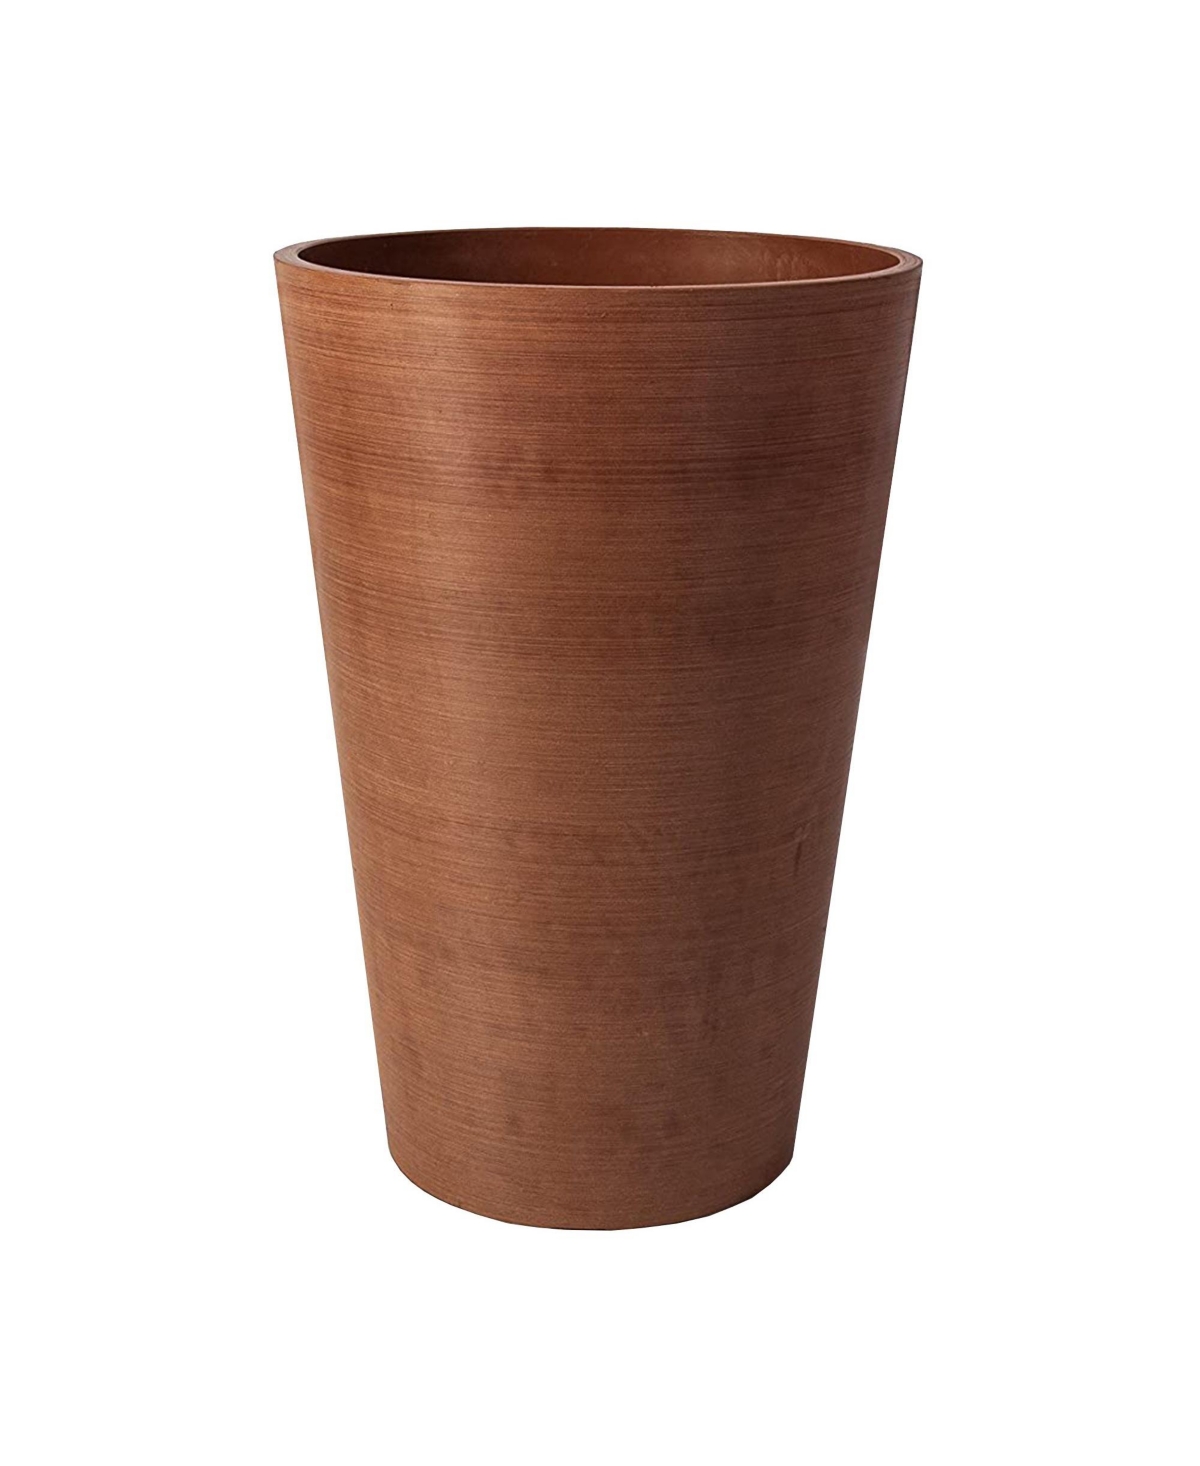 Valencia Round Outdoor Planter Pot Terra Cotta 16 Inch - Brown